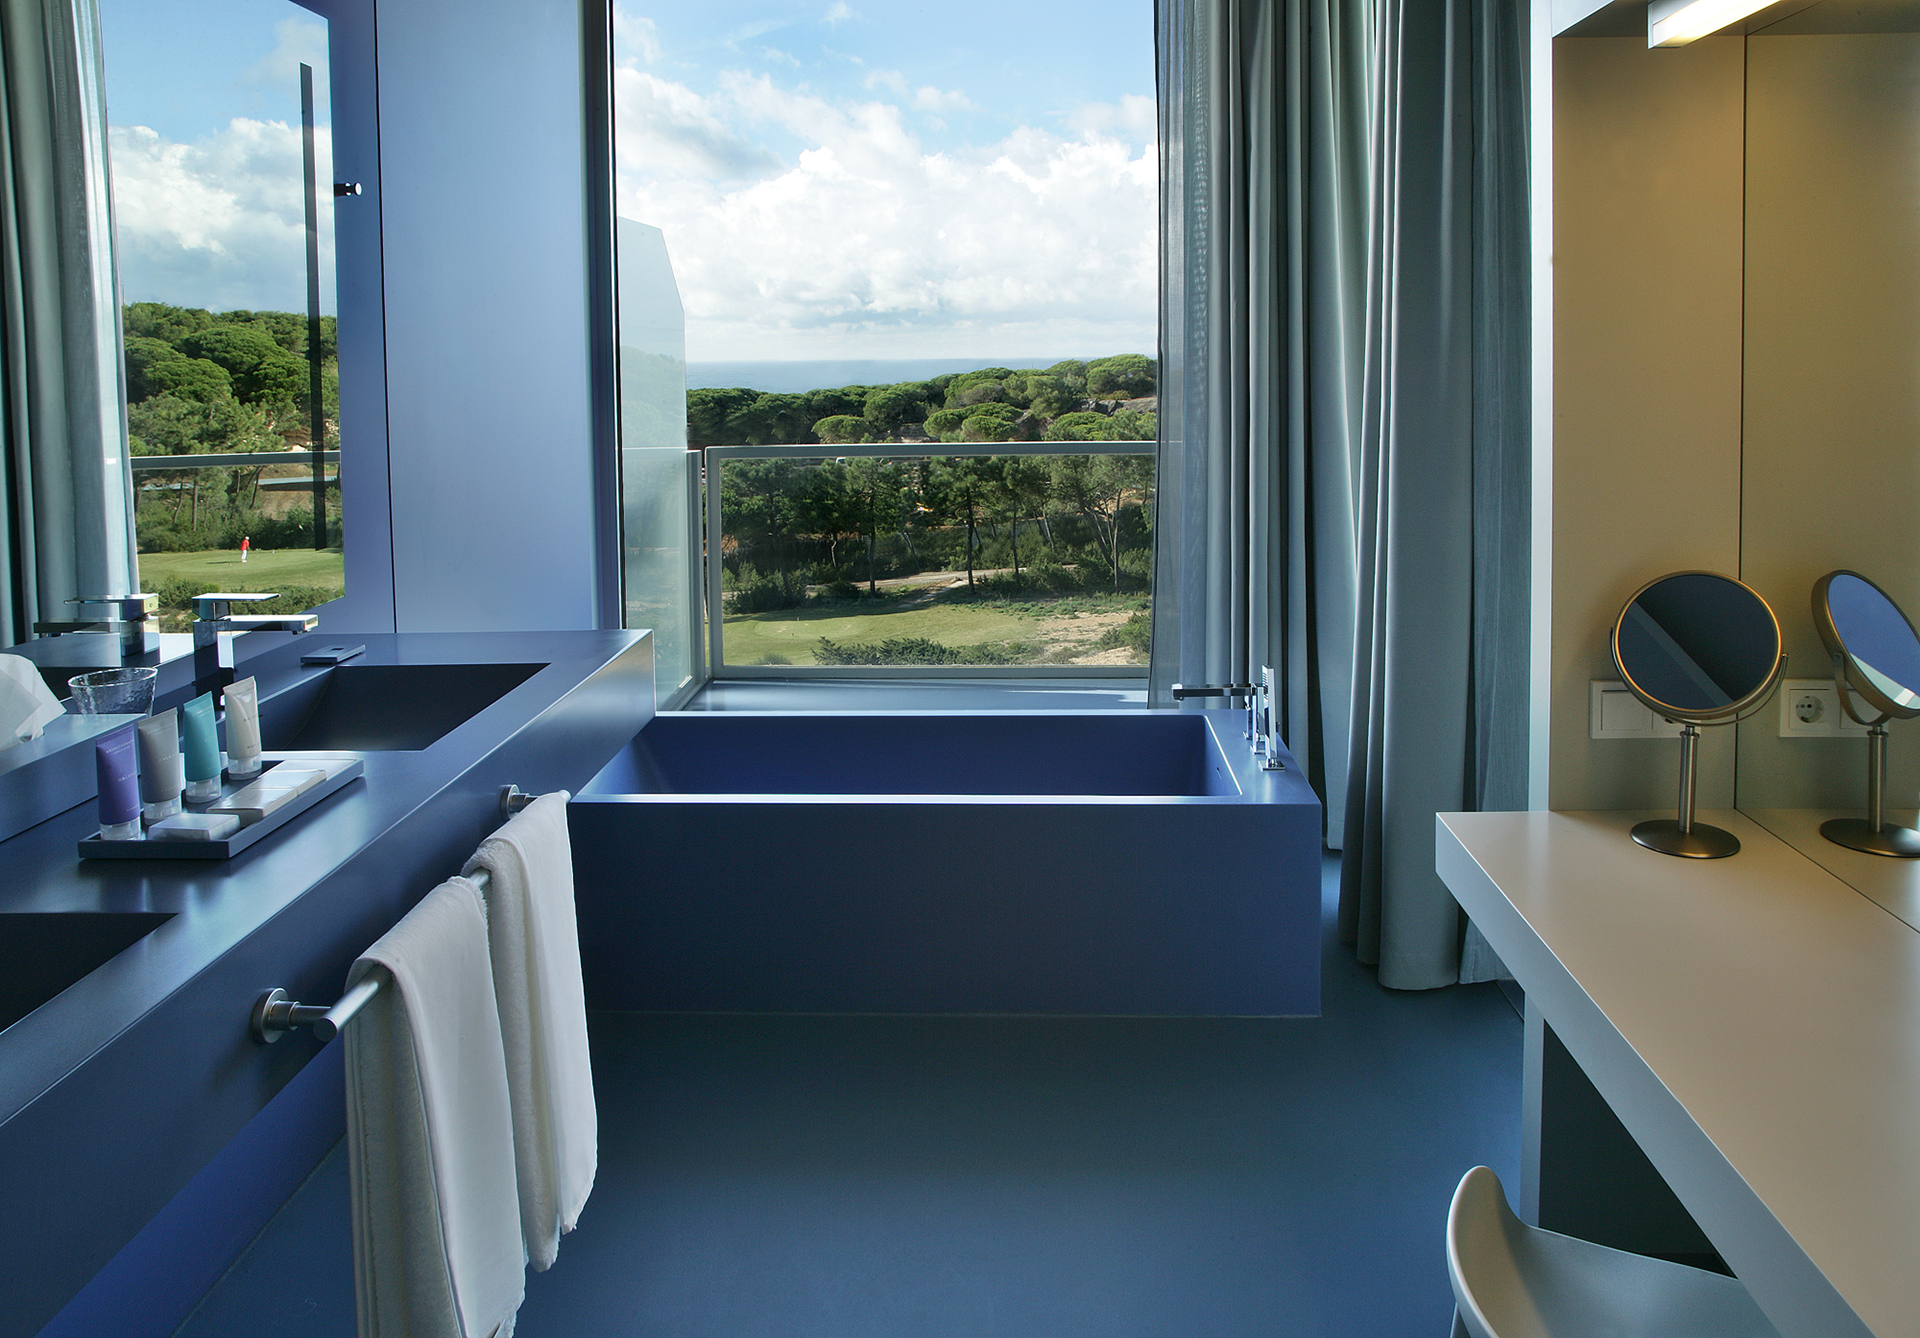 Golf-expedition-golfreizen-golfresort-Royal-The-Oitavos-Hotel-appartement-bathroom-with-view